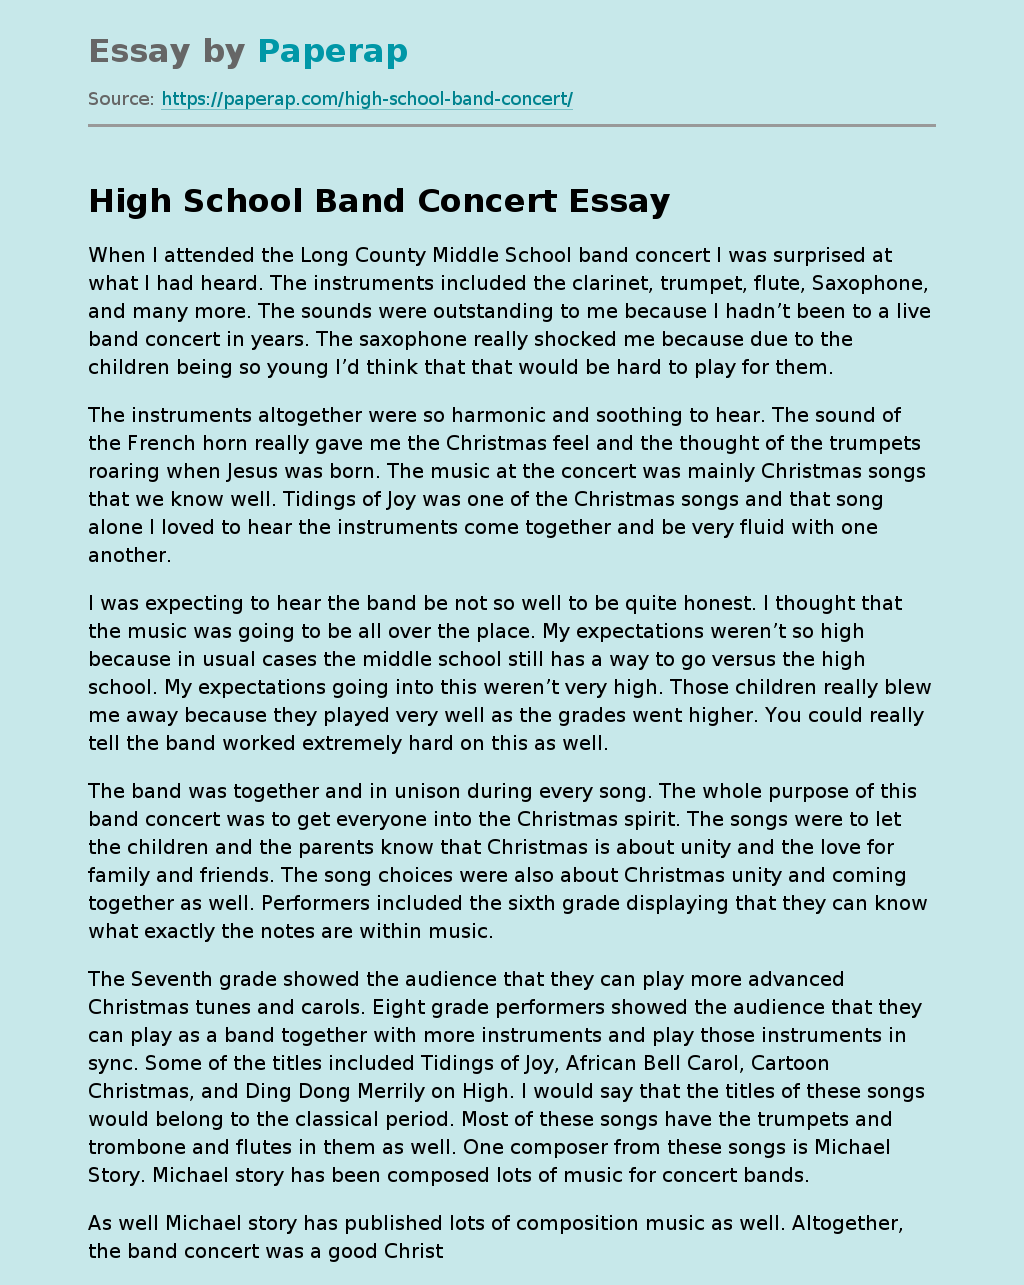 High School Band Concert